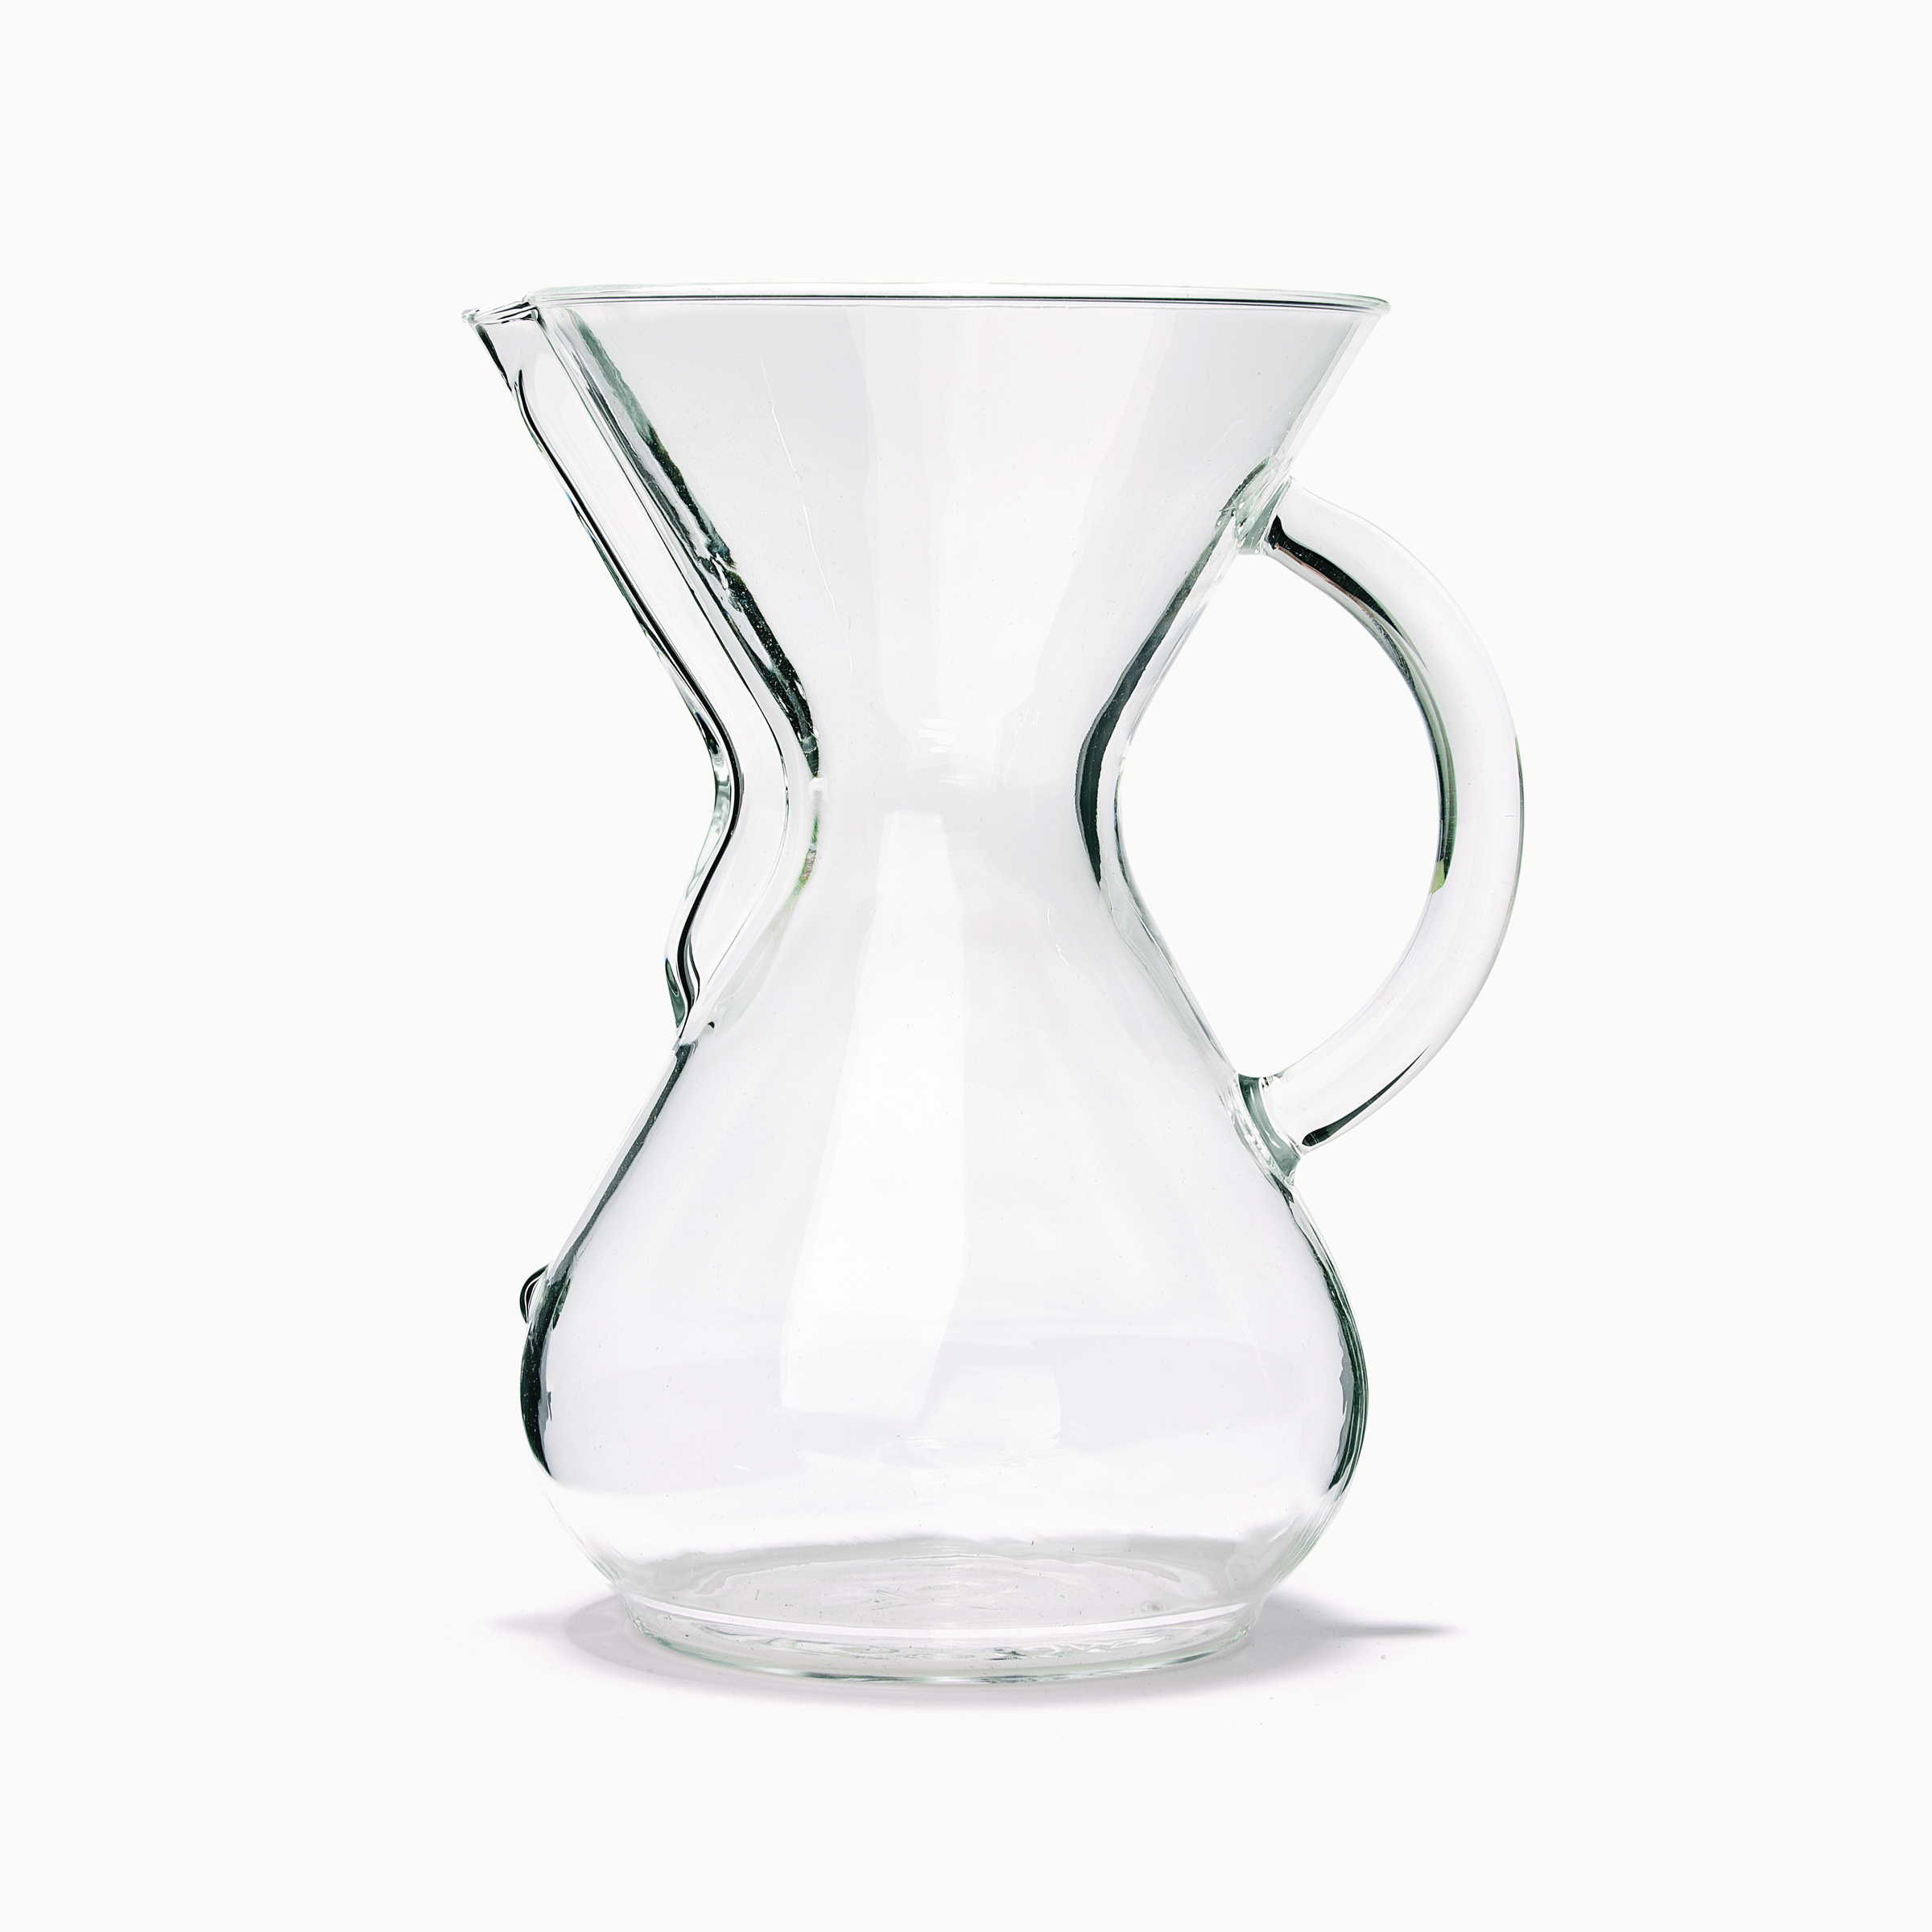 Chemex Glass Handle 6 Cups